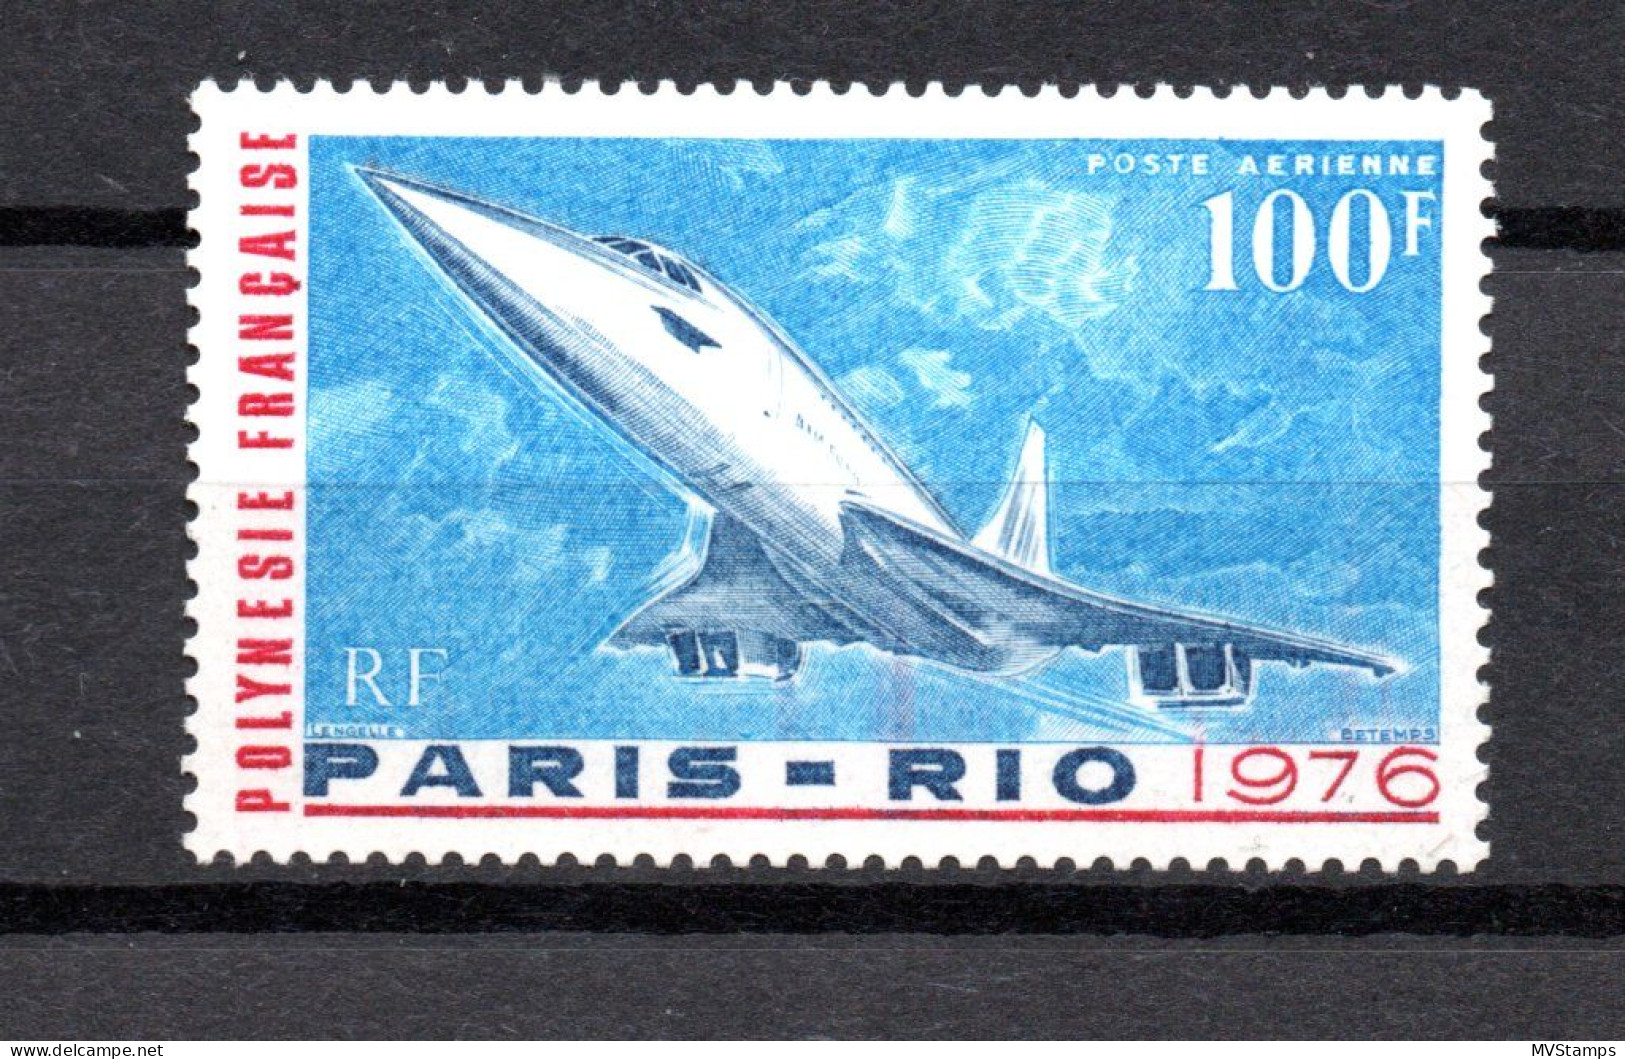 Polynesia (France ) 1976 Concorde/Aviation/airmail Stamp (Michel 208) MNH - Ungebraucht